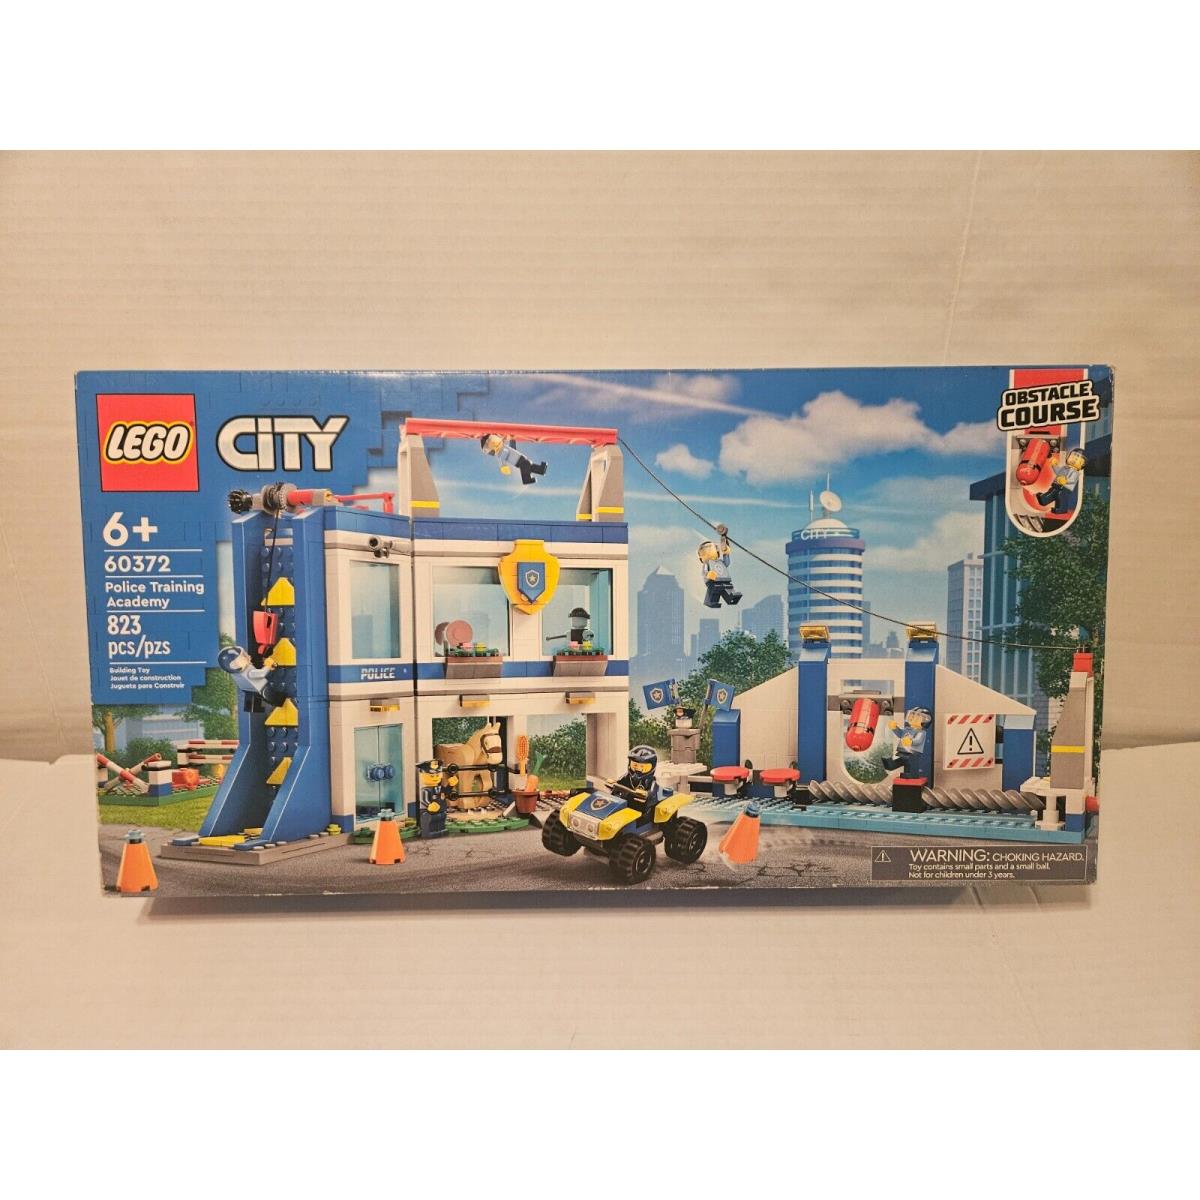 Lego City Police Training Academy 60372 Building Toy Set